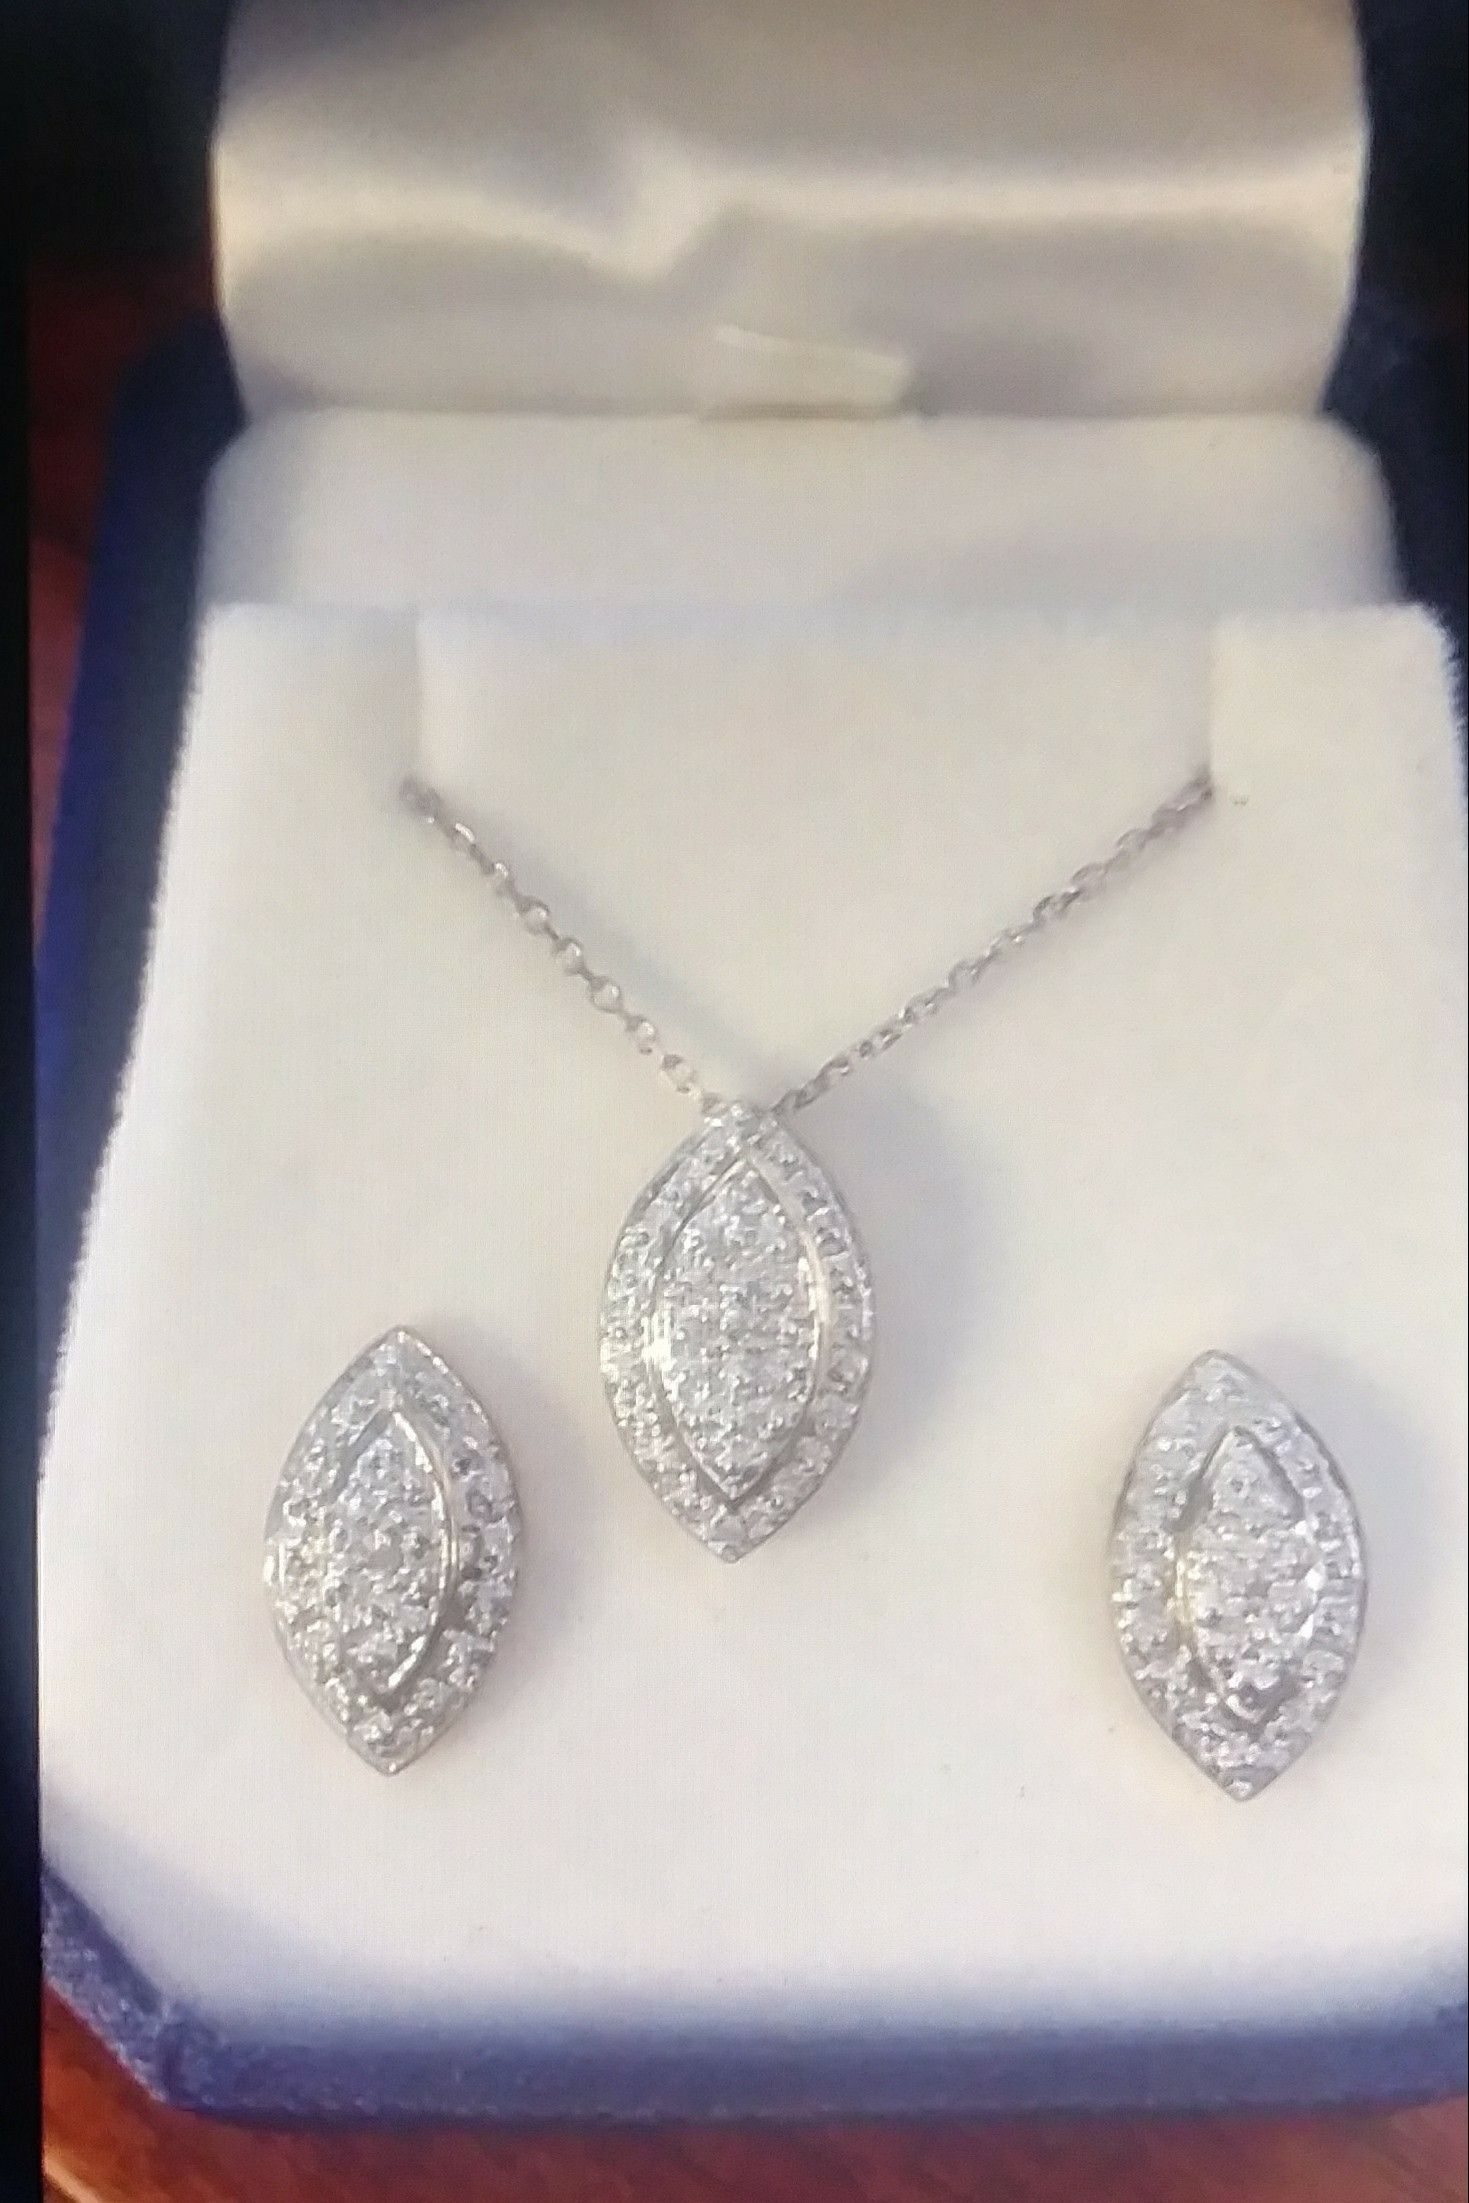 NEW Genuine Diamond necklace earrings set